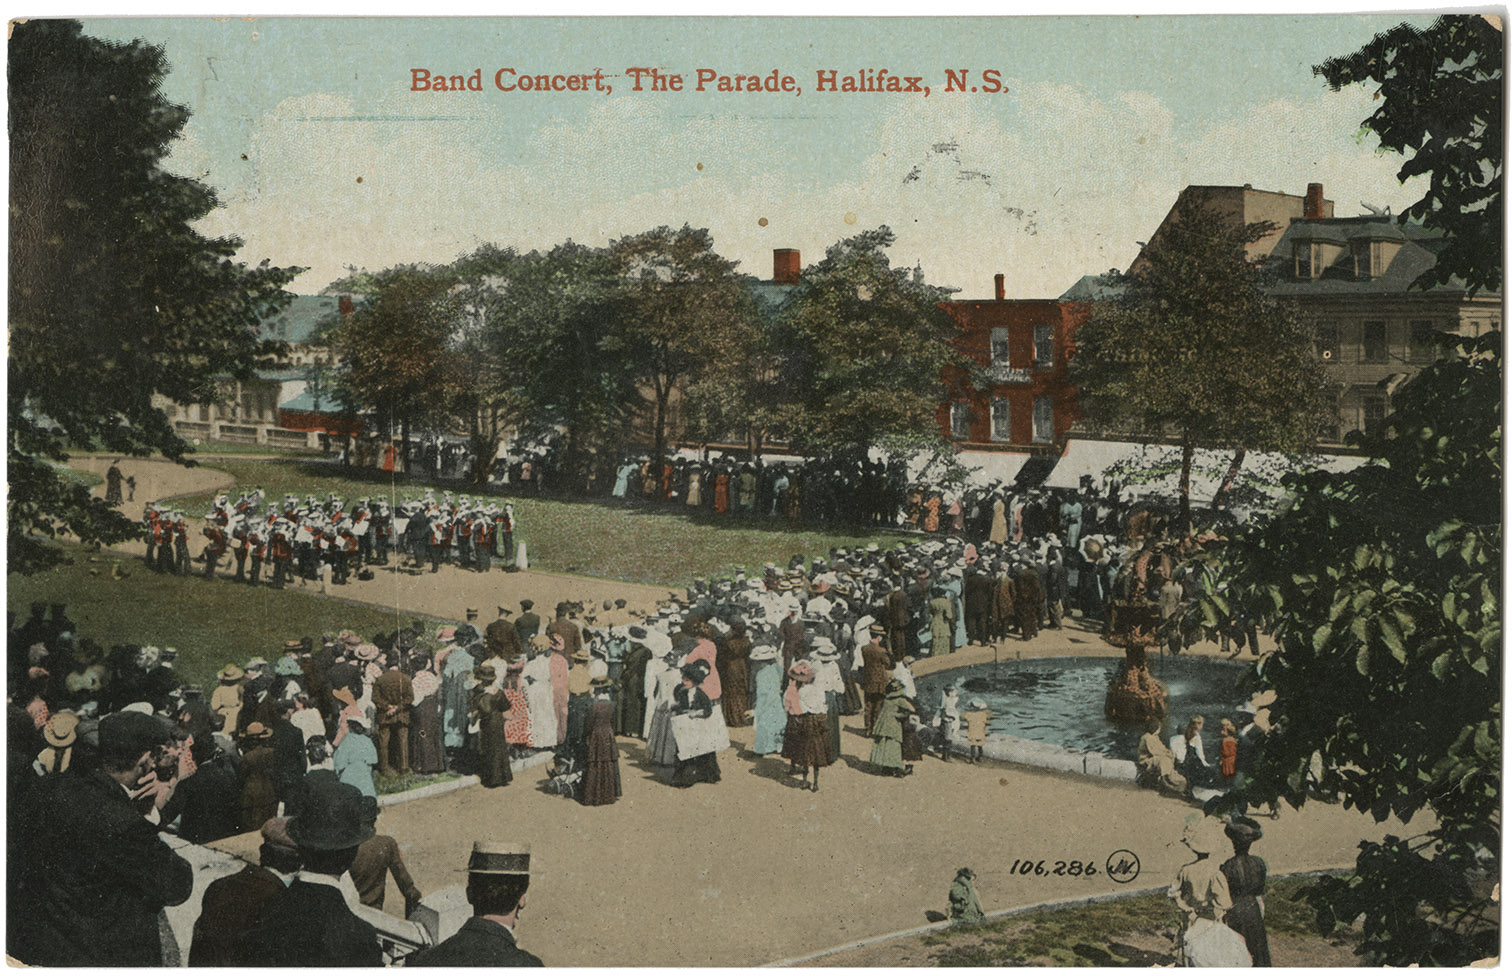 communityalbums - Band Concert, The Parade, Halifax, N.S.